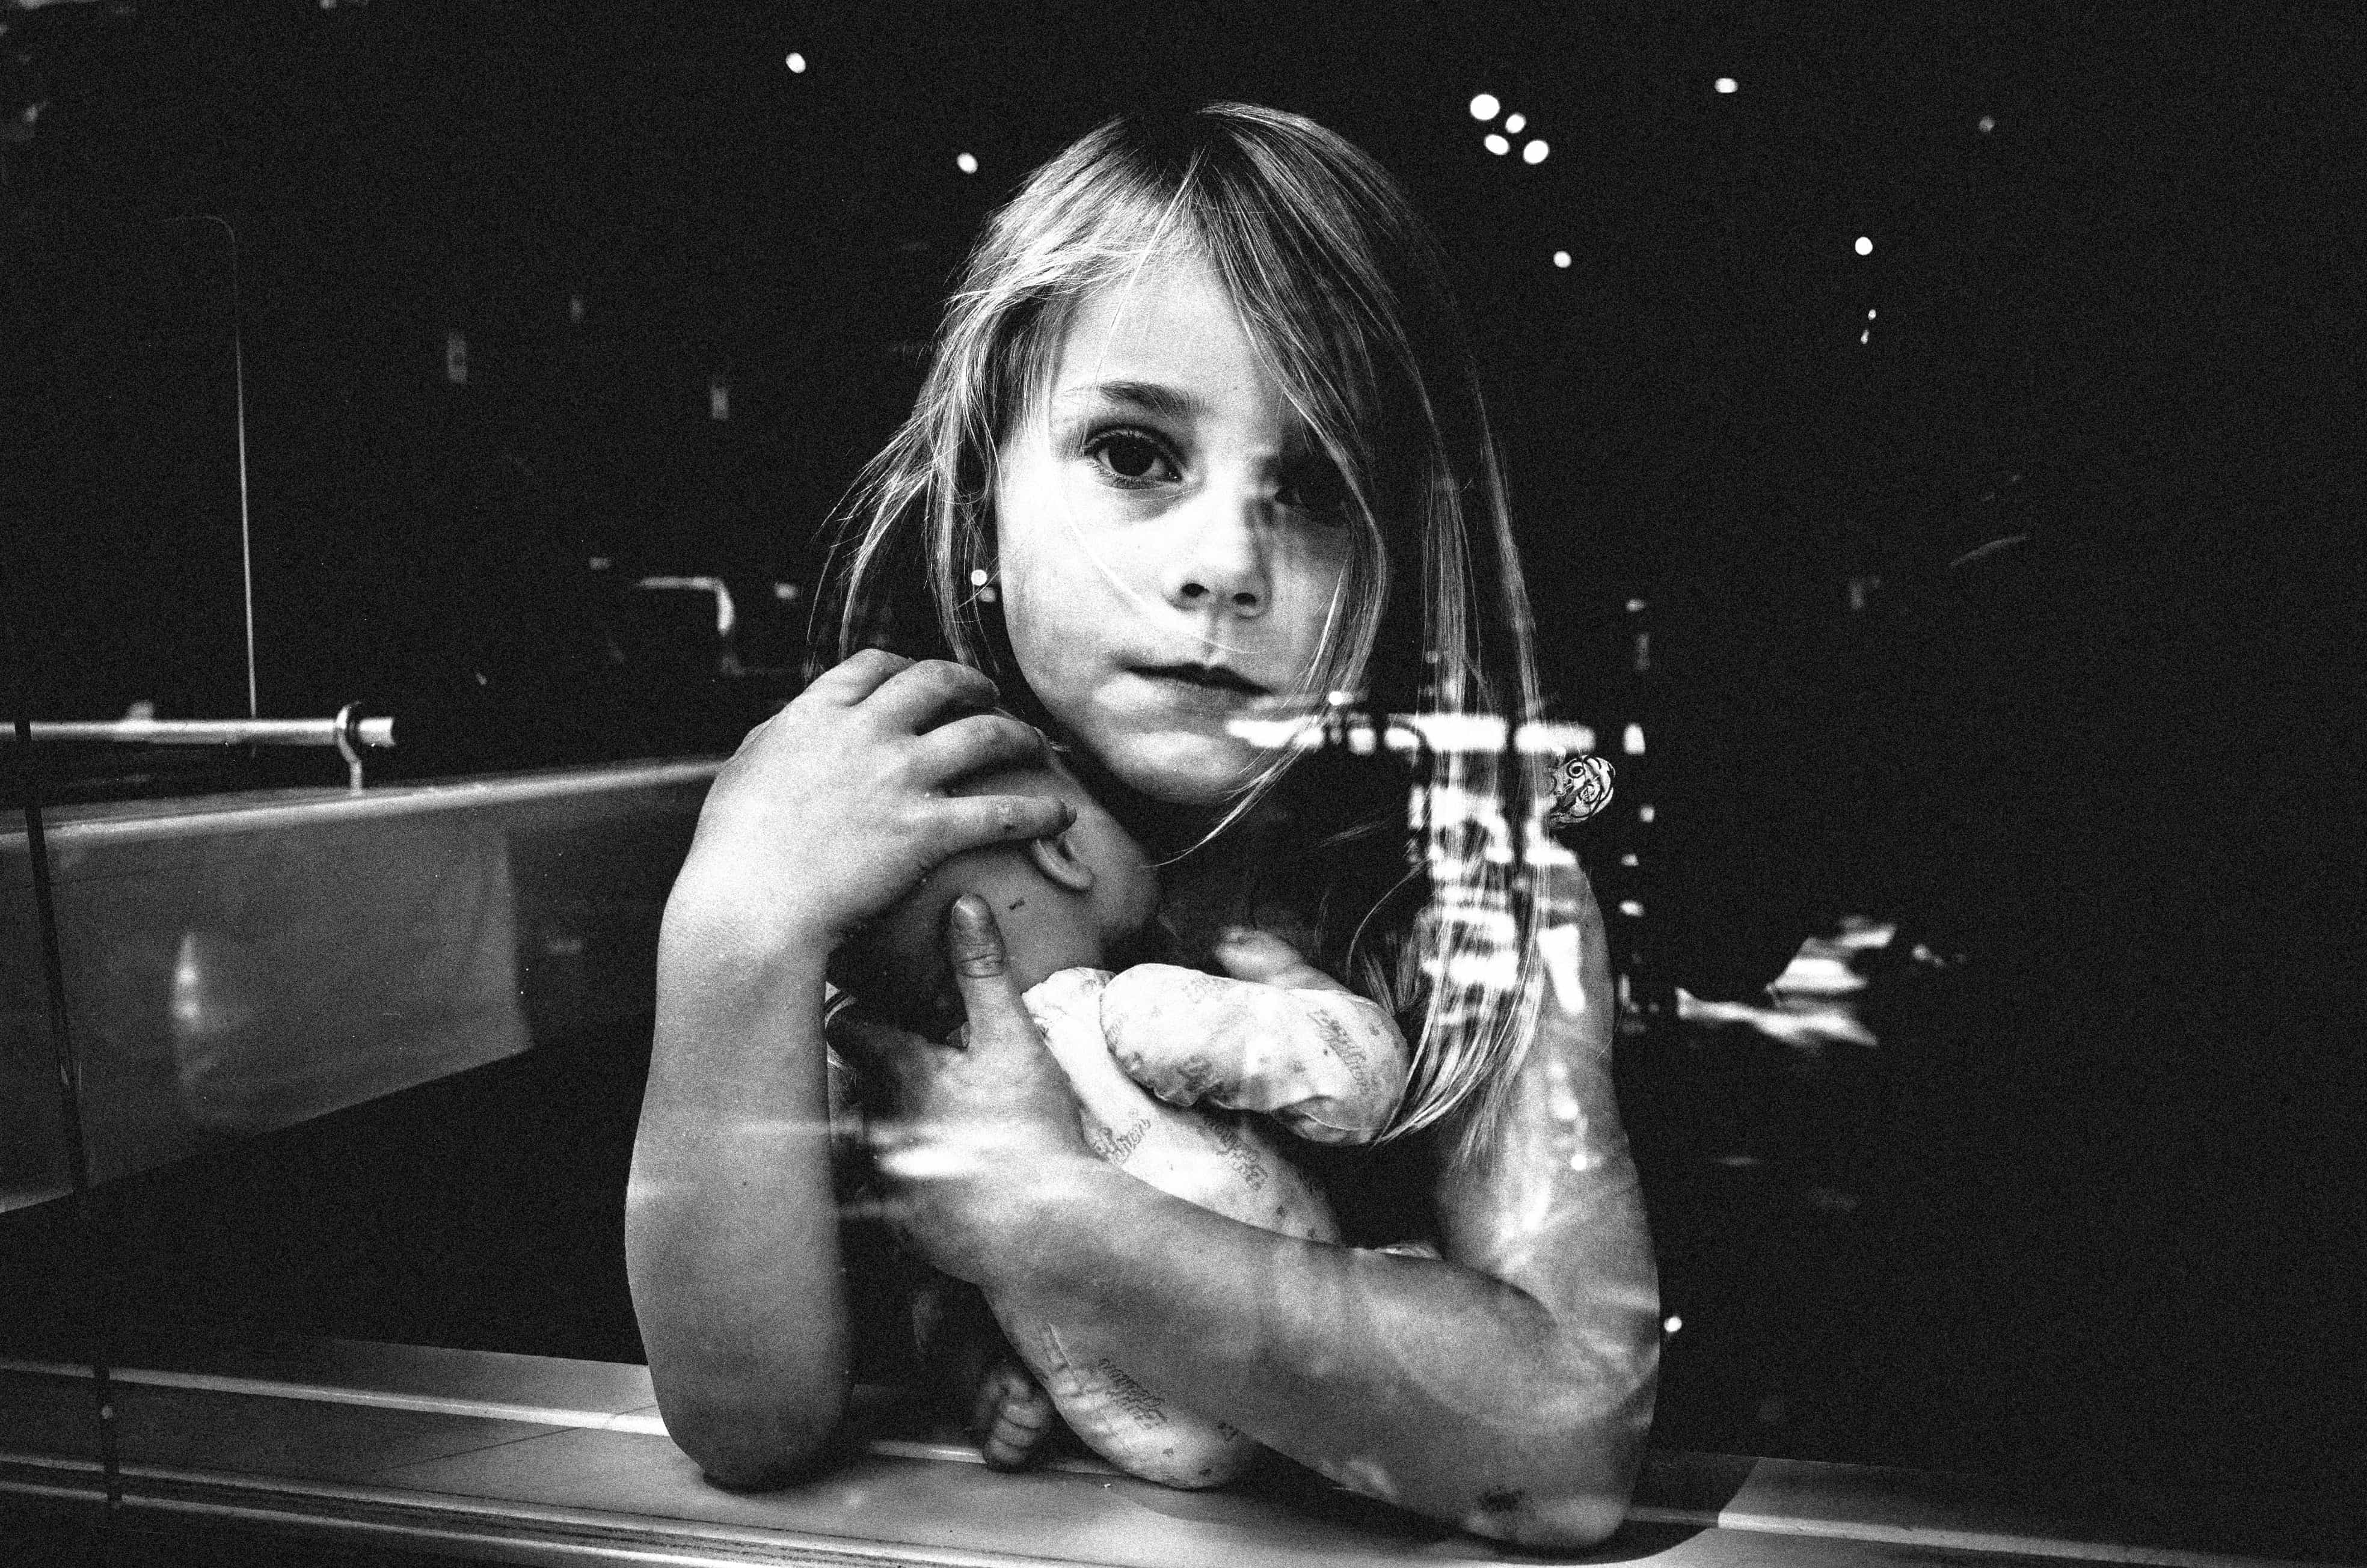 amsterdam-2015-ricohgr-doll-girl-eric kim street photograpy - black and white - Monochrome-14